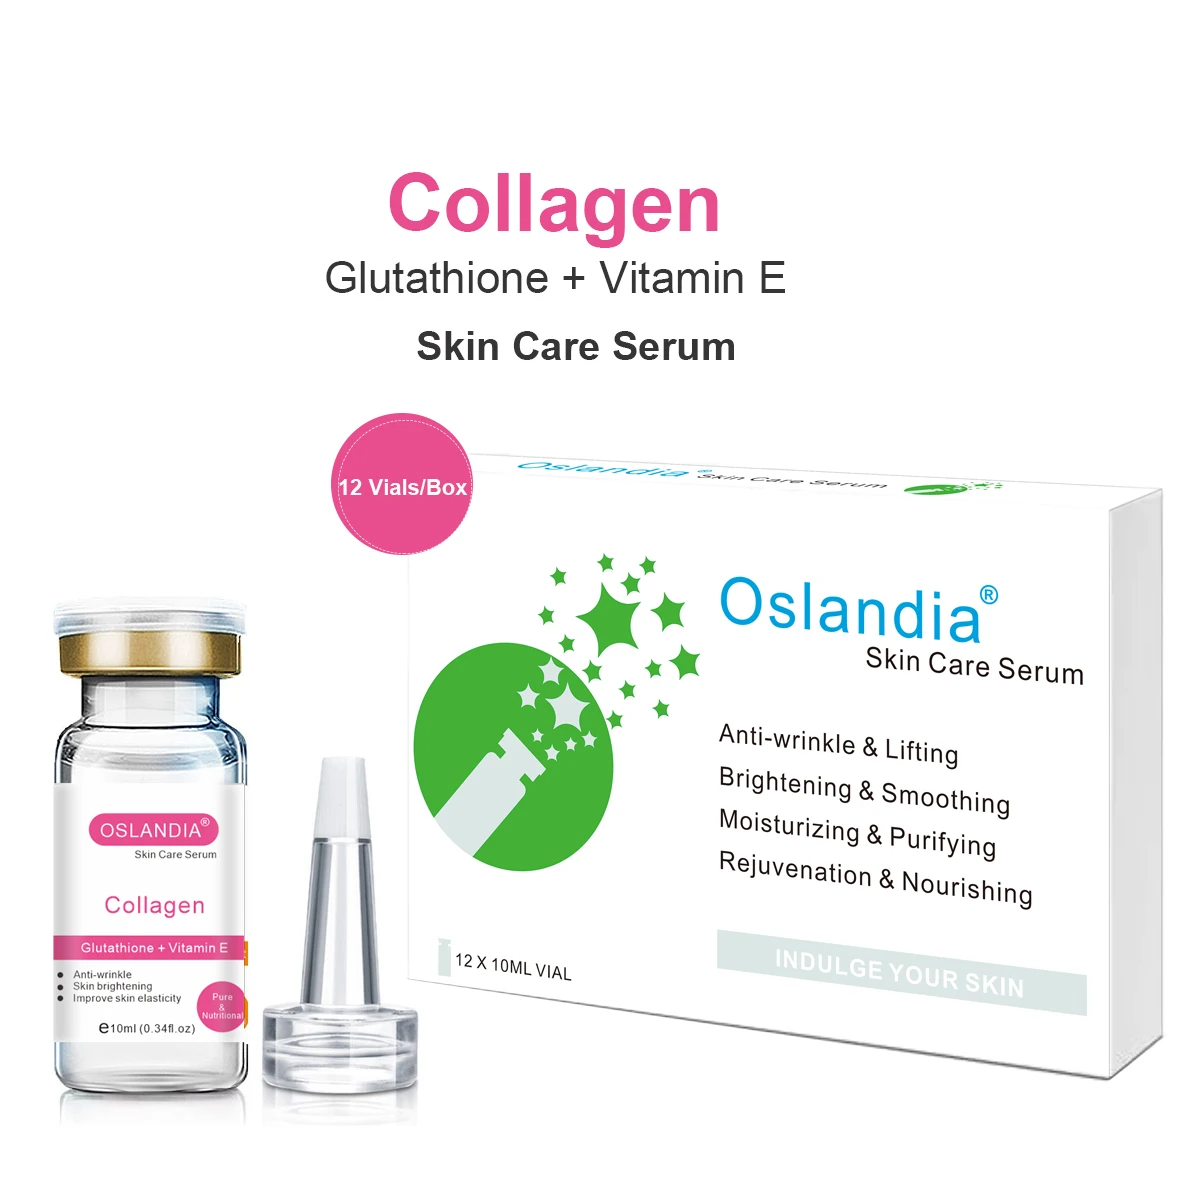 Oslandia Collagen Glutathione Vitamin E Anti-wrinkle Facial Skincare Serum Anti-aging Rejuvenation Face Essence 12 Vials/Box